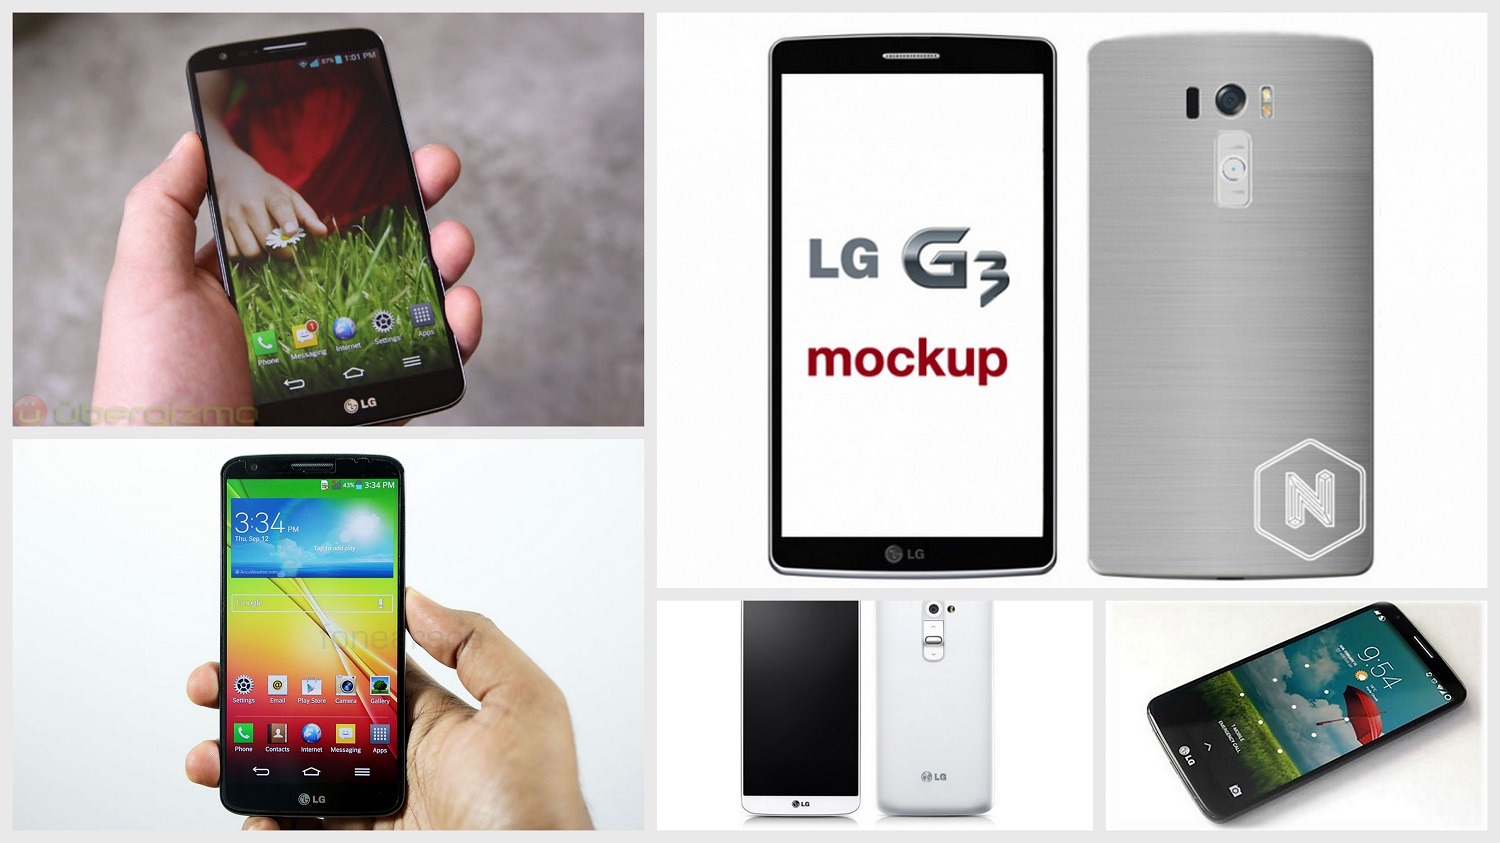 LG G3 Upcoming Smartphones